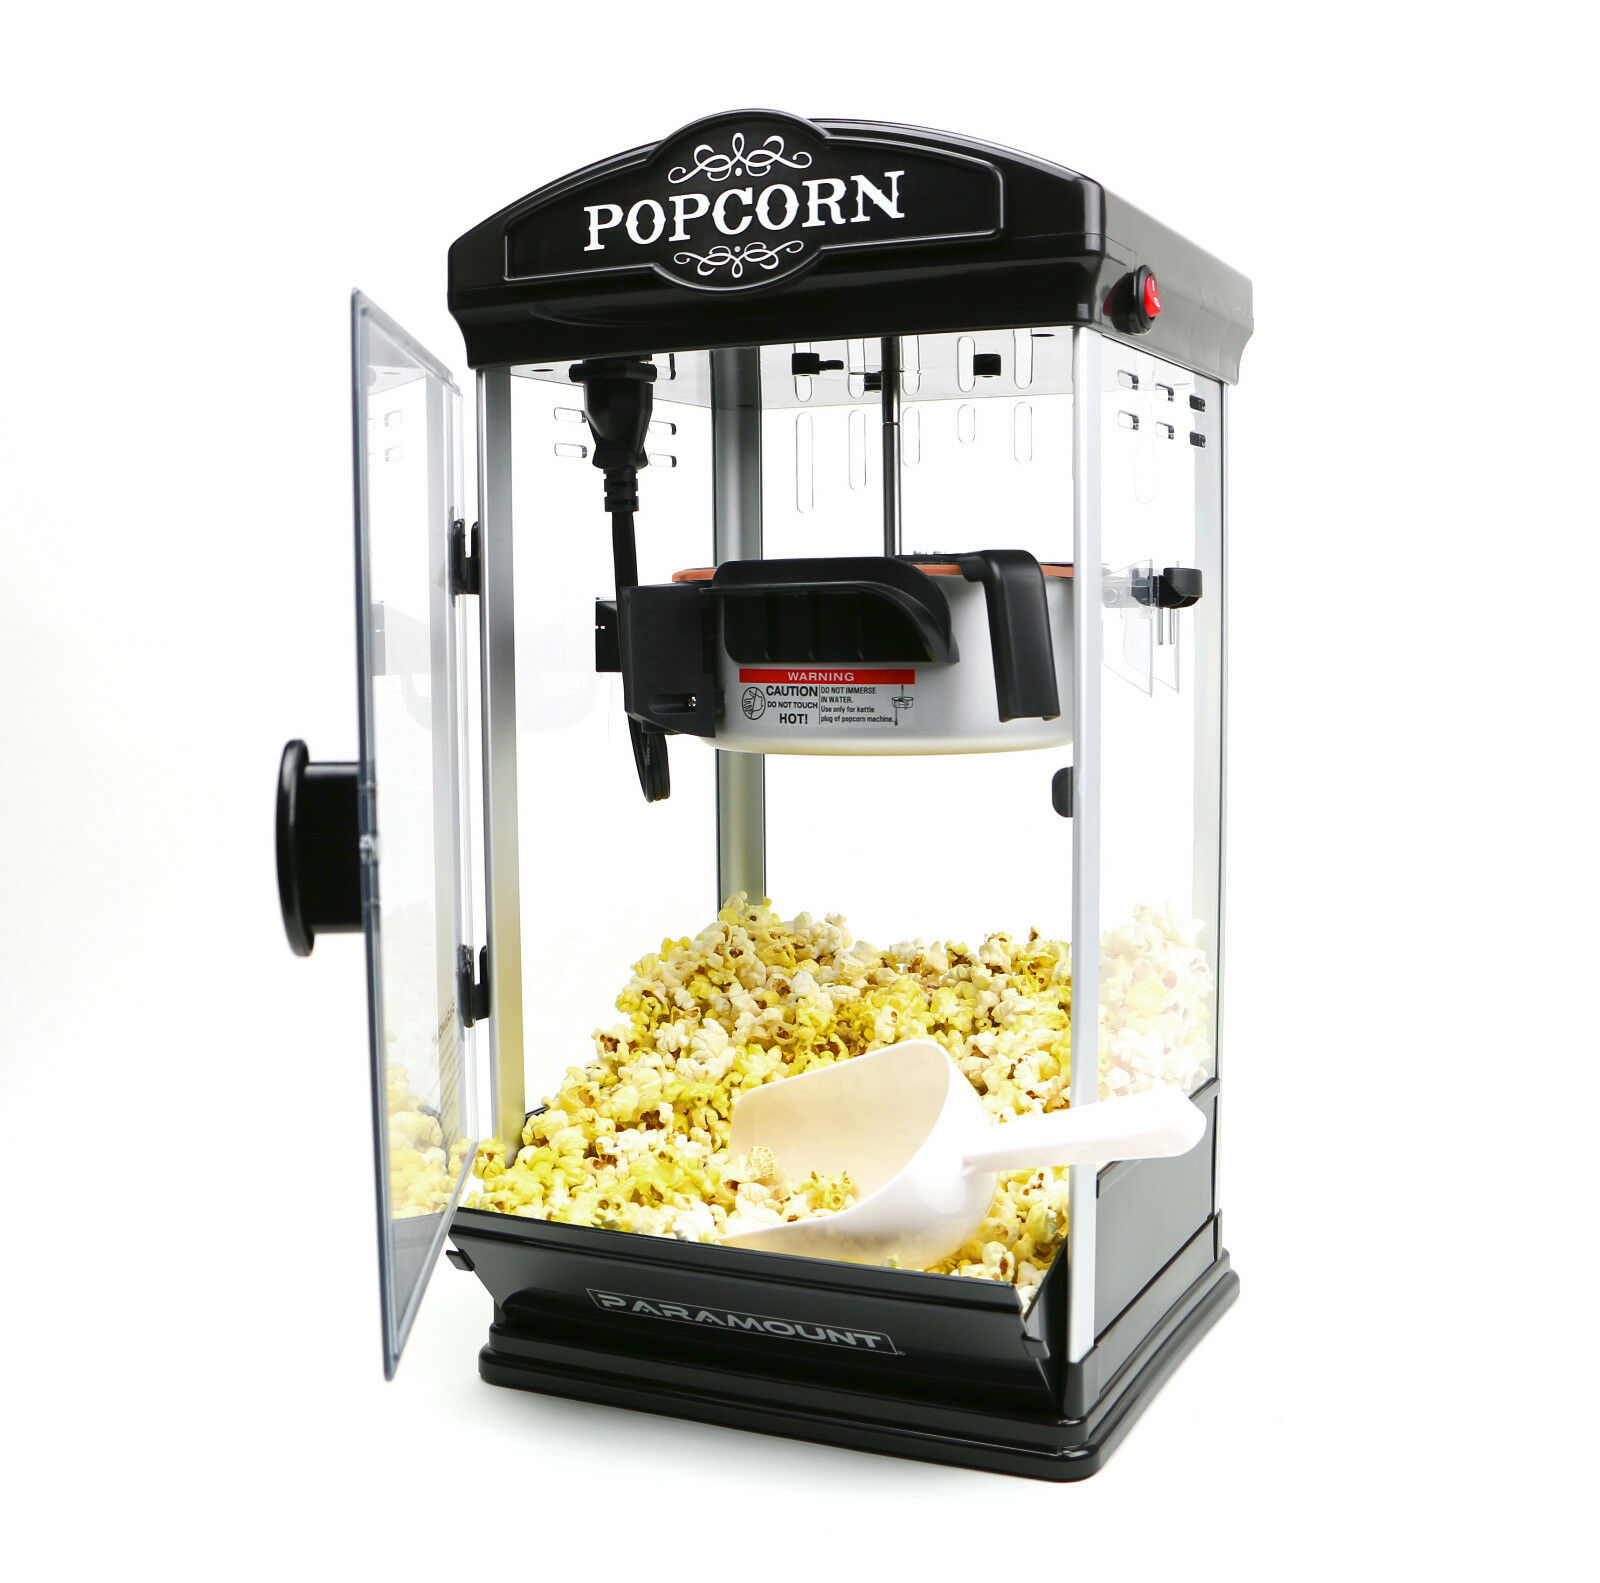 8oz Black Popcorn Maker Machine By Paramount - New 8 Oz Capacity Theater Popper